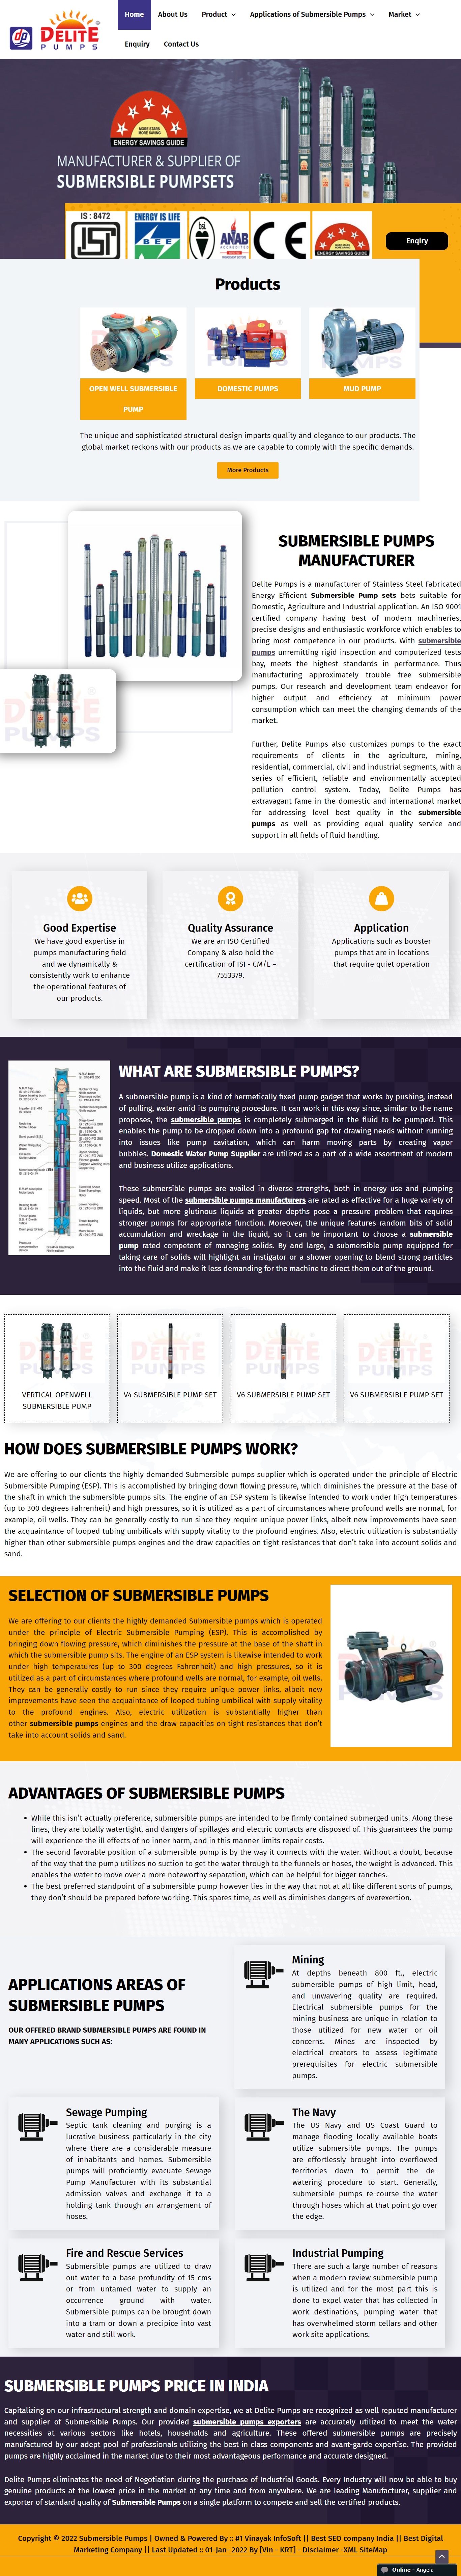 submersible-pumps